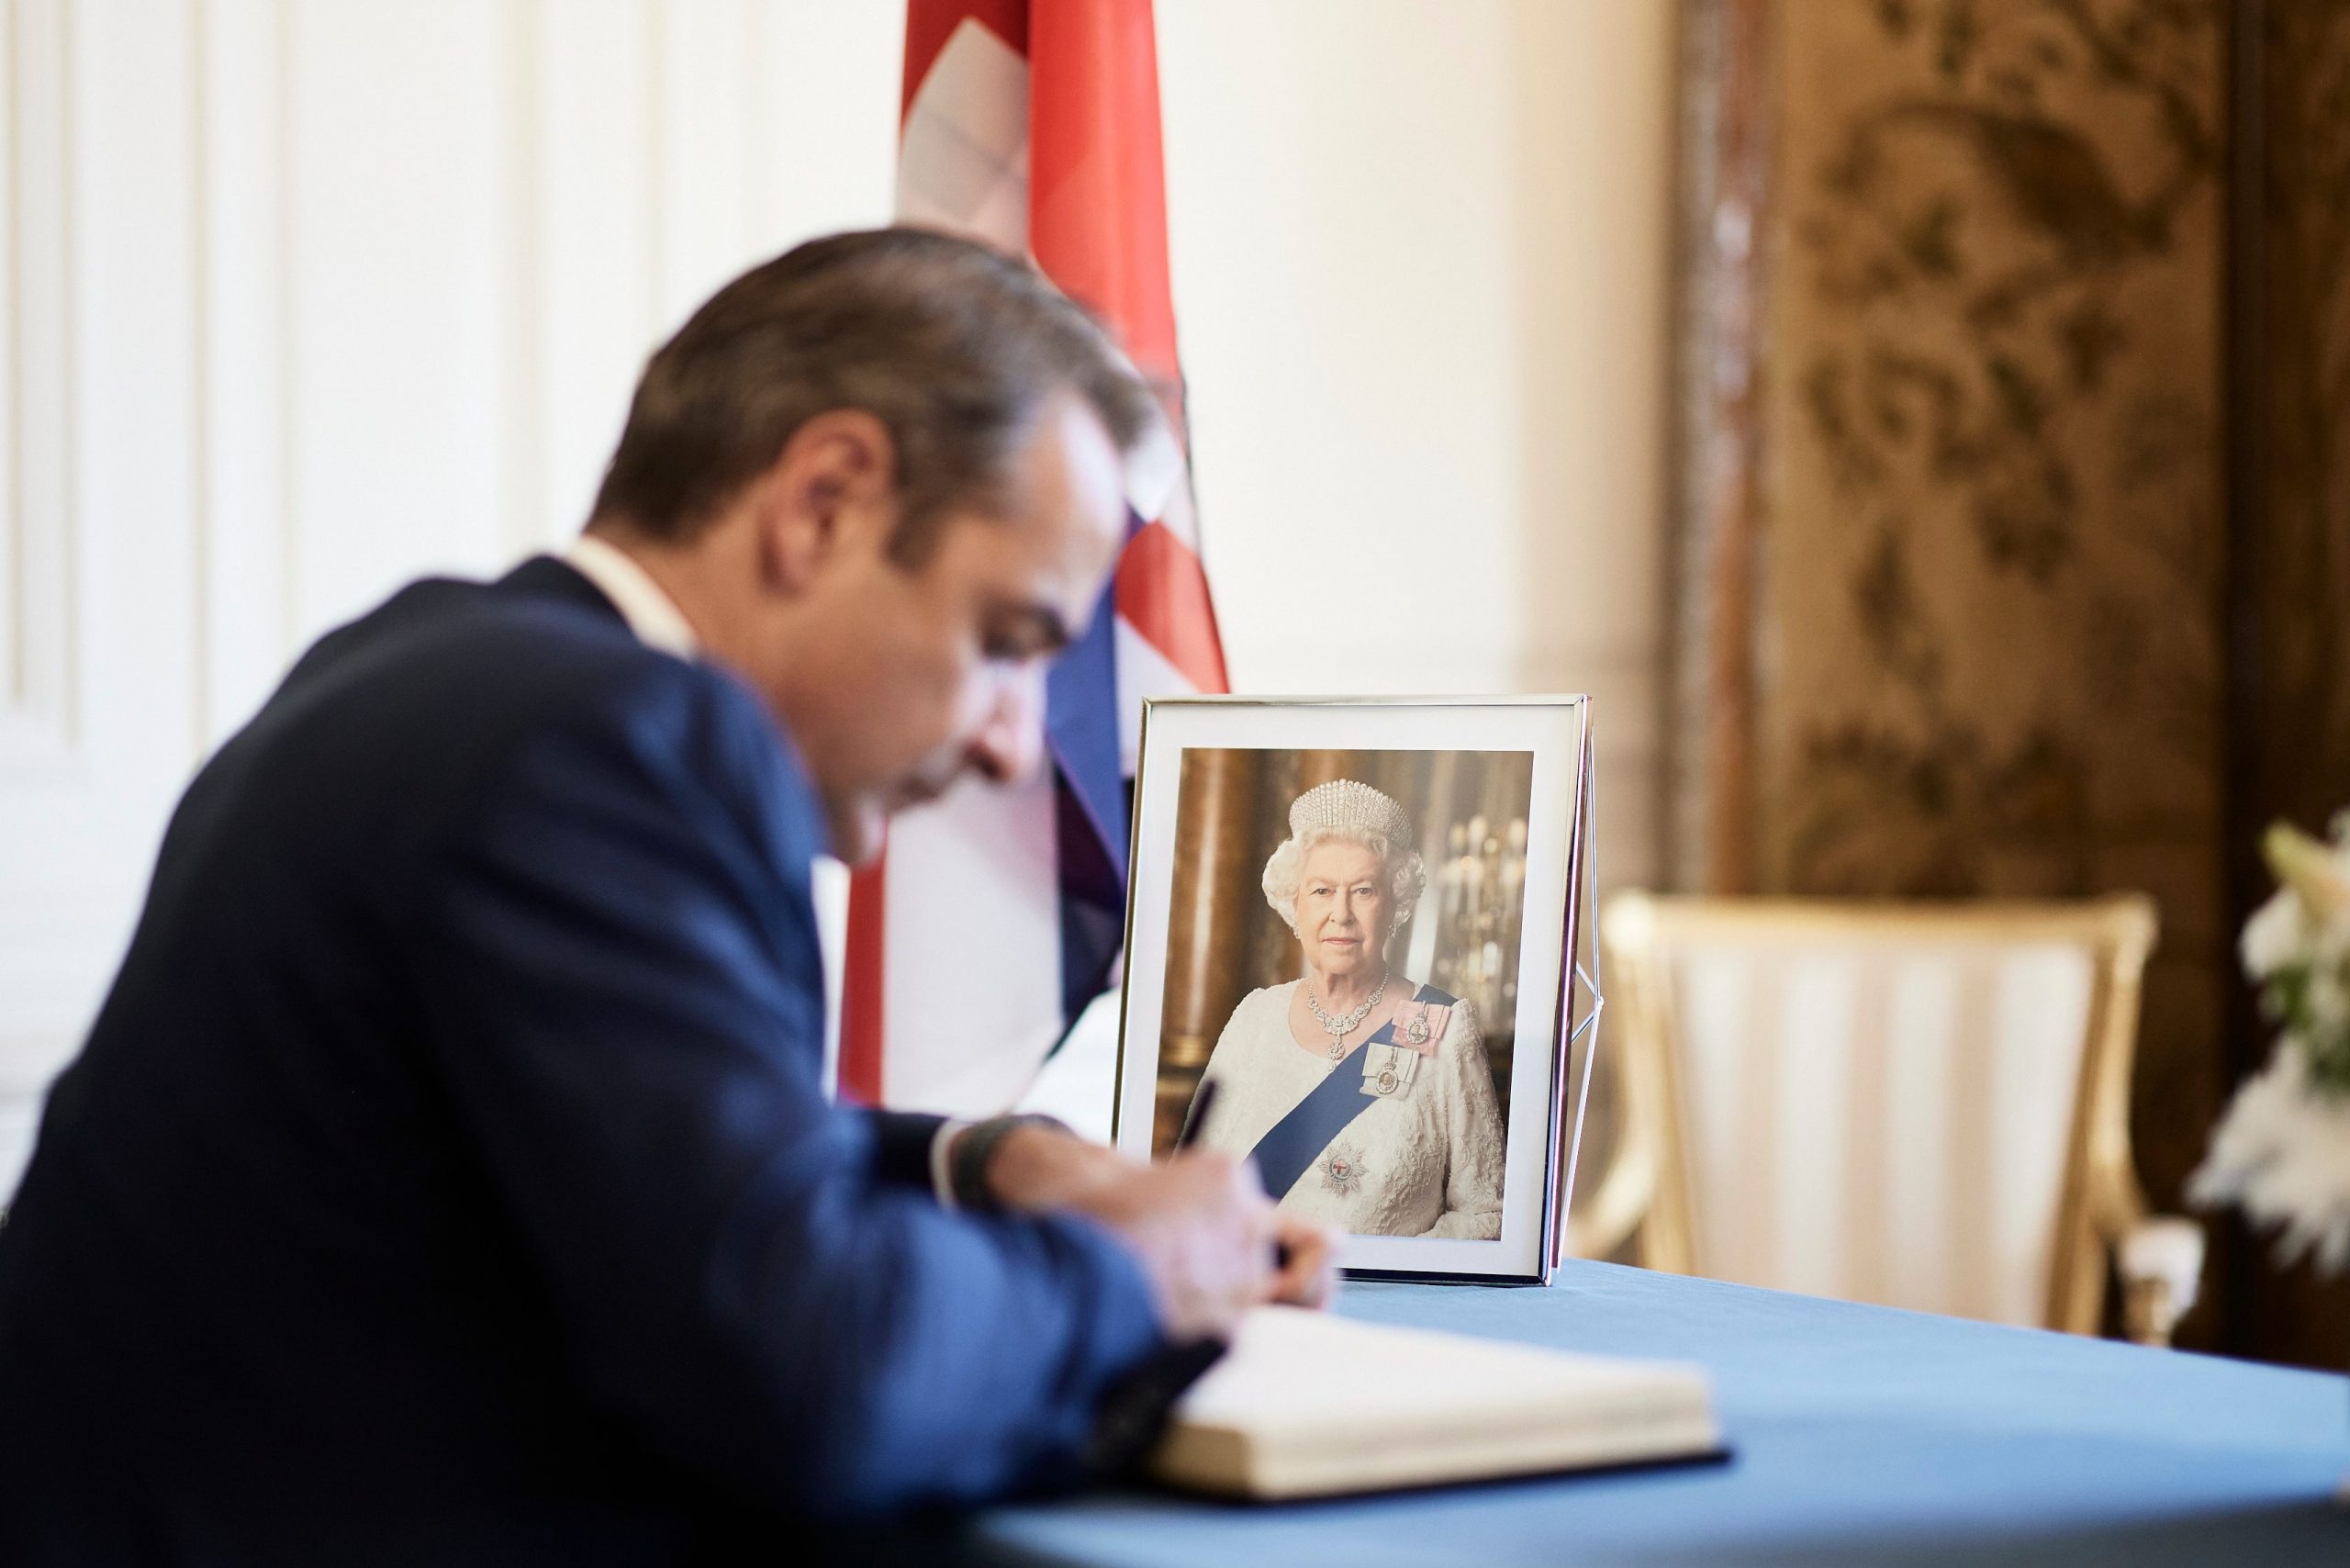 Greek Prime Minister signed Queen Elizabeth II’s condolence book